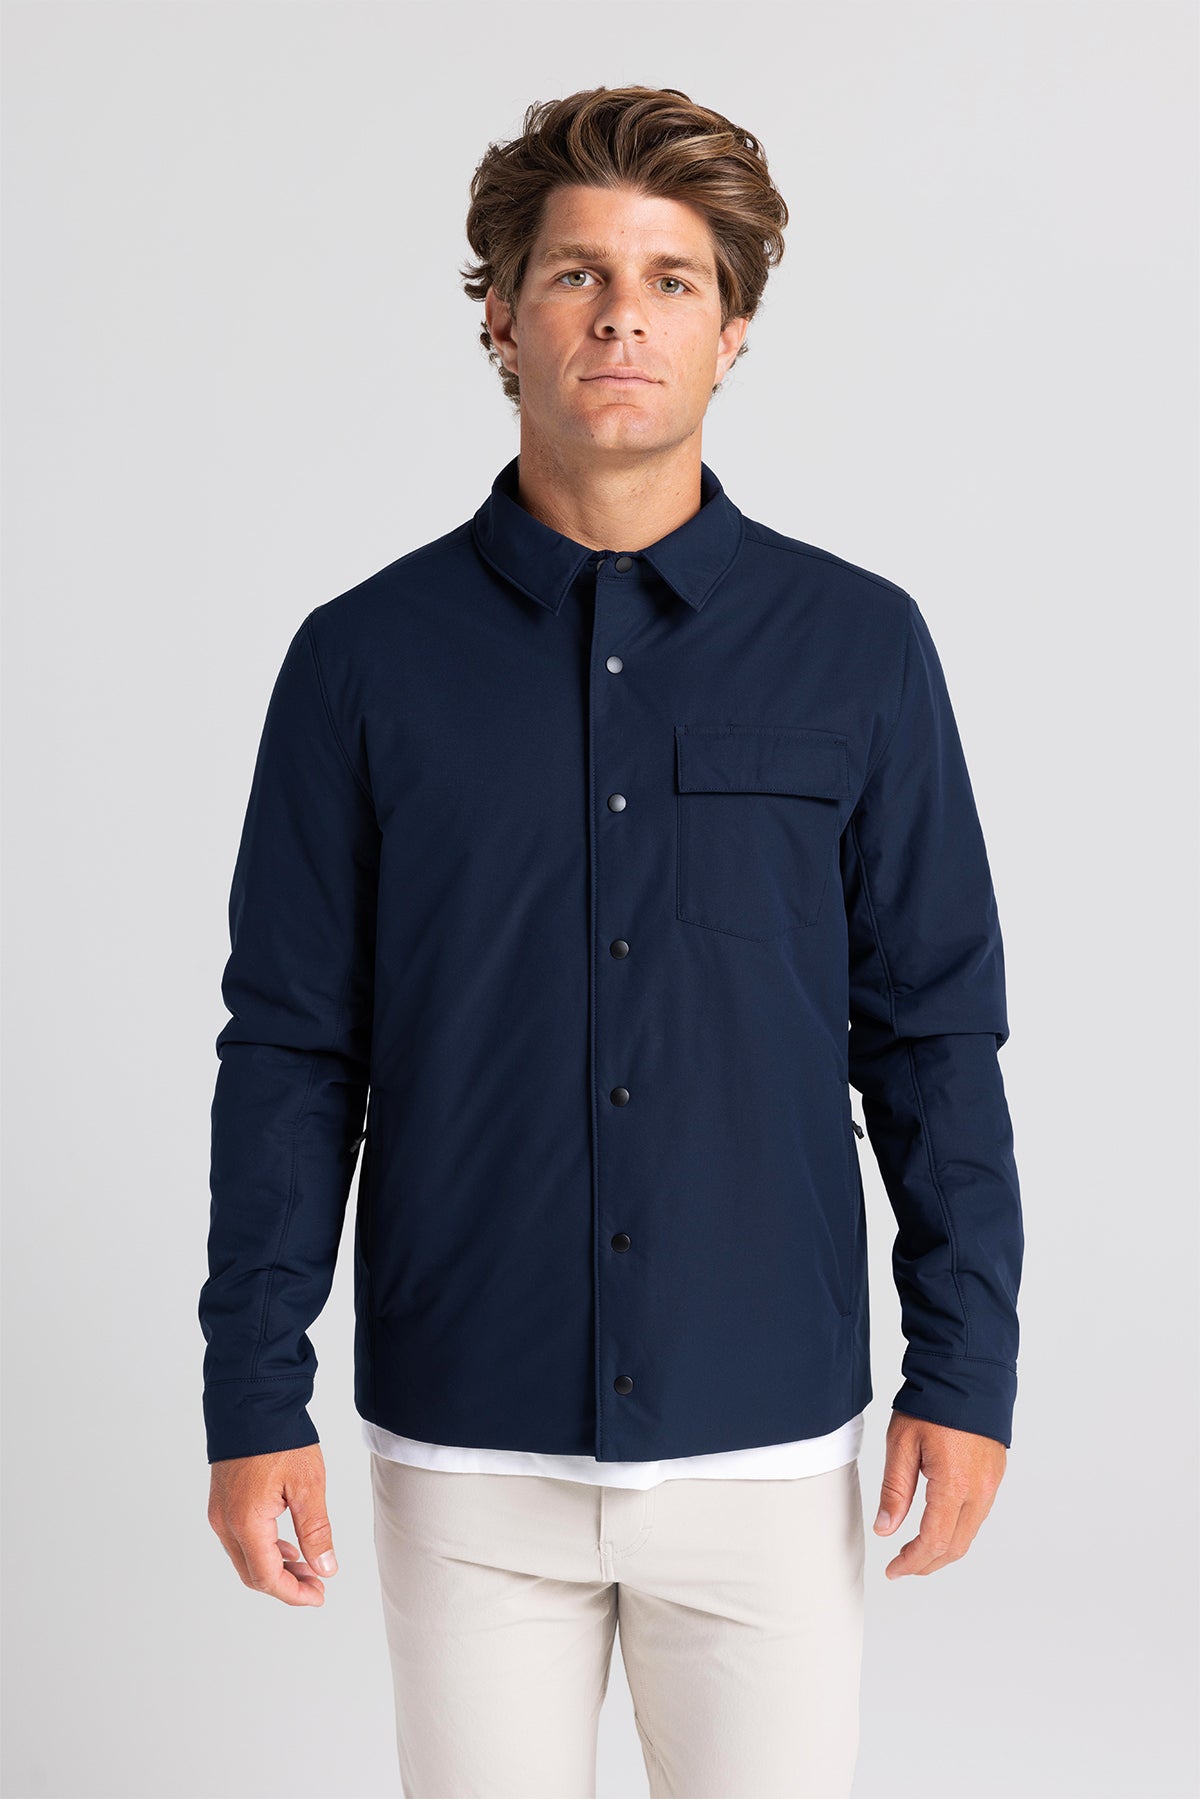 AirLoft Shirt Jacket - Navy
